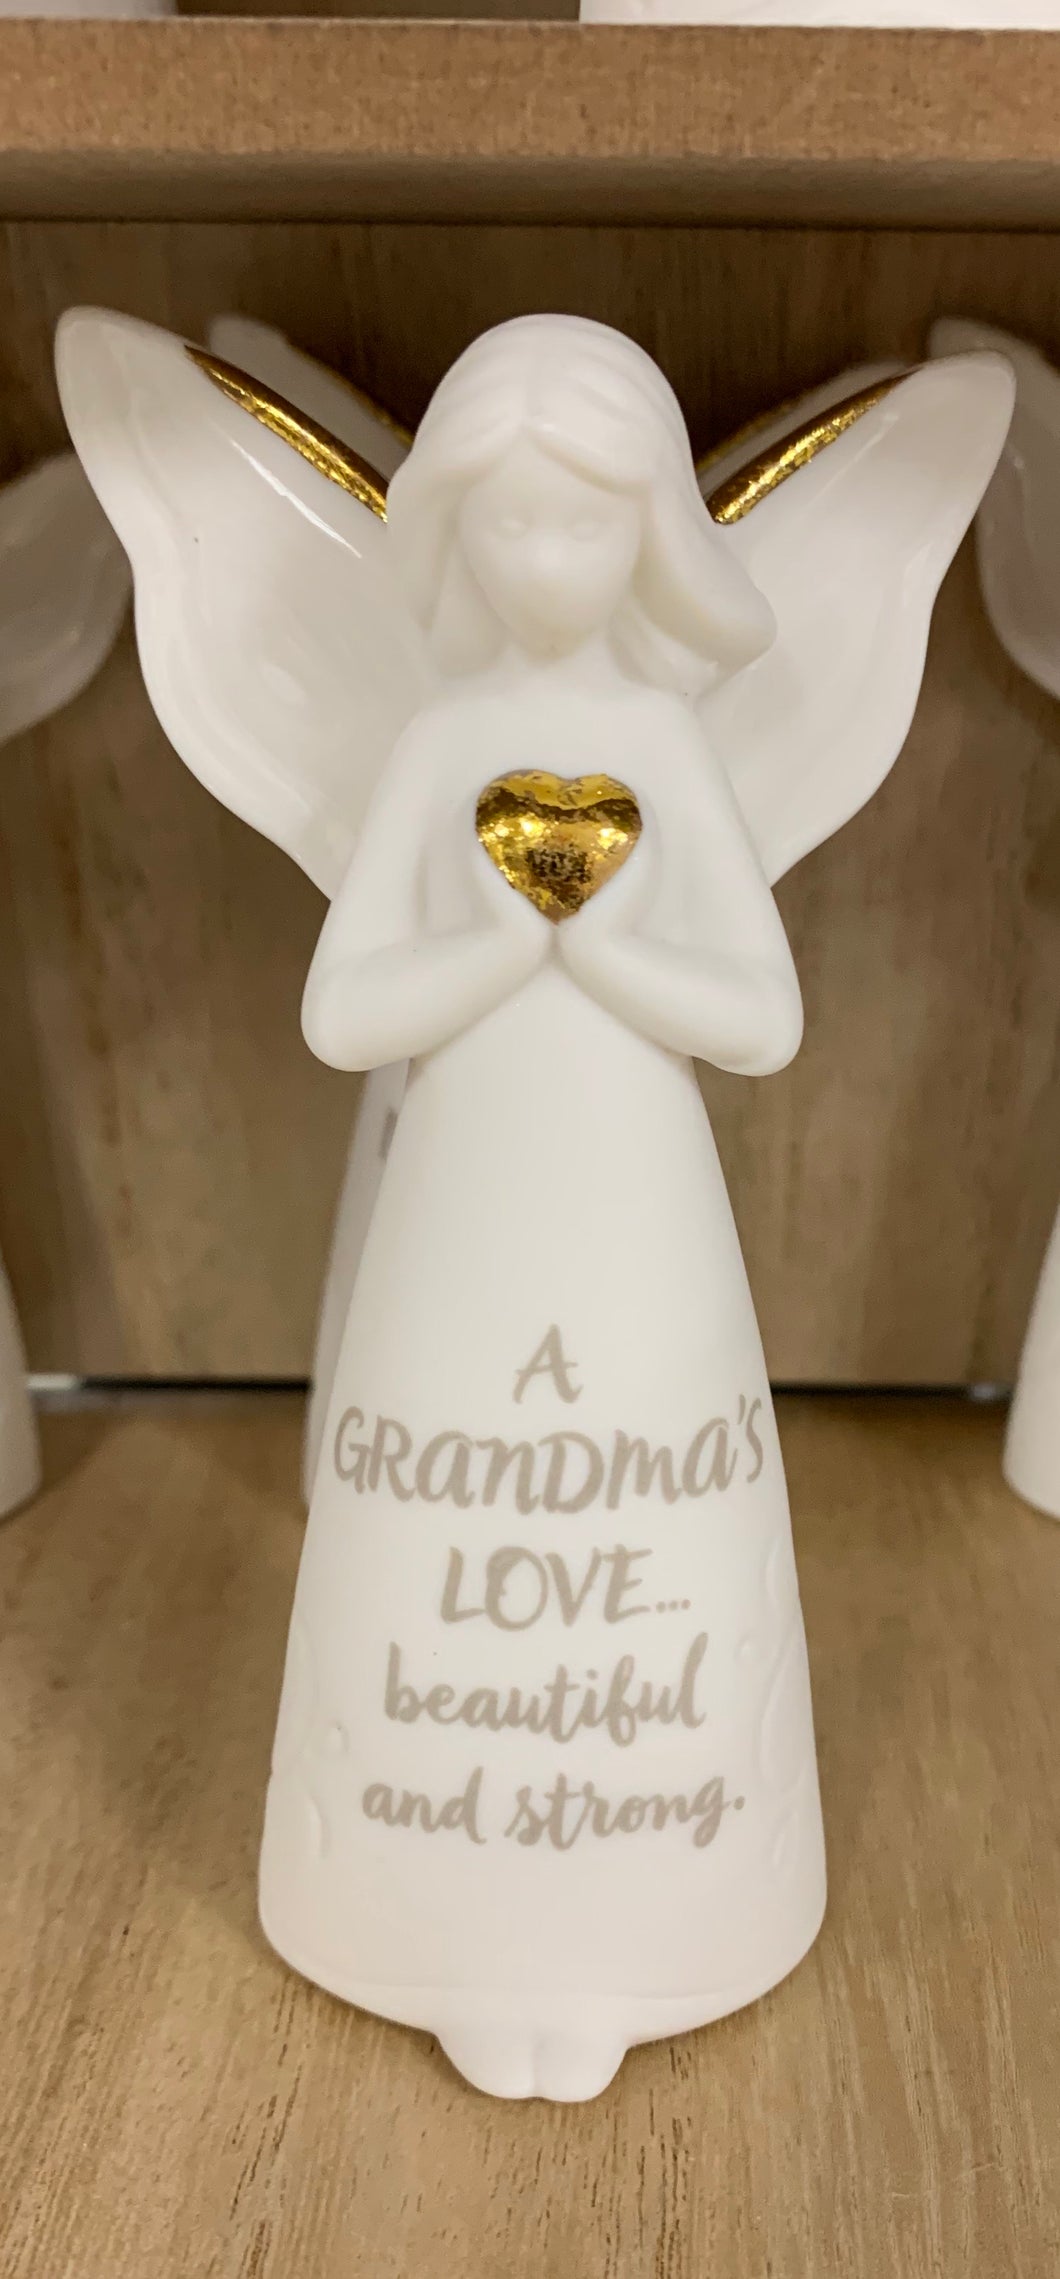 A grandmas love angel